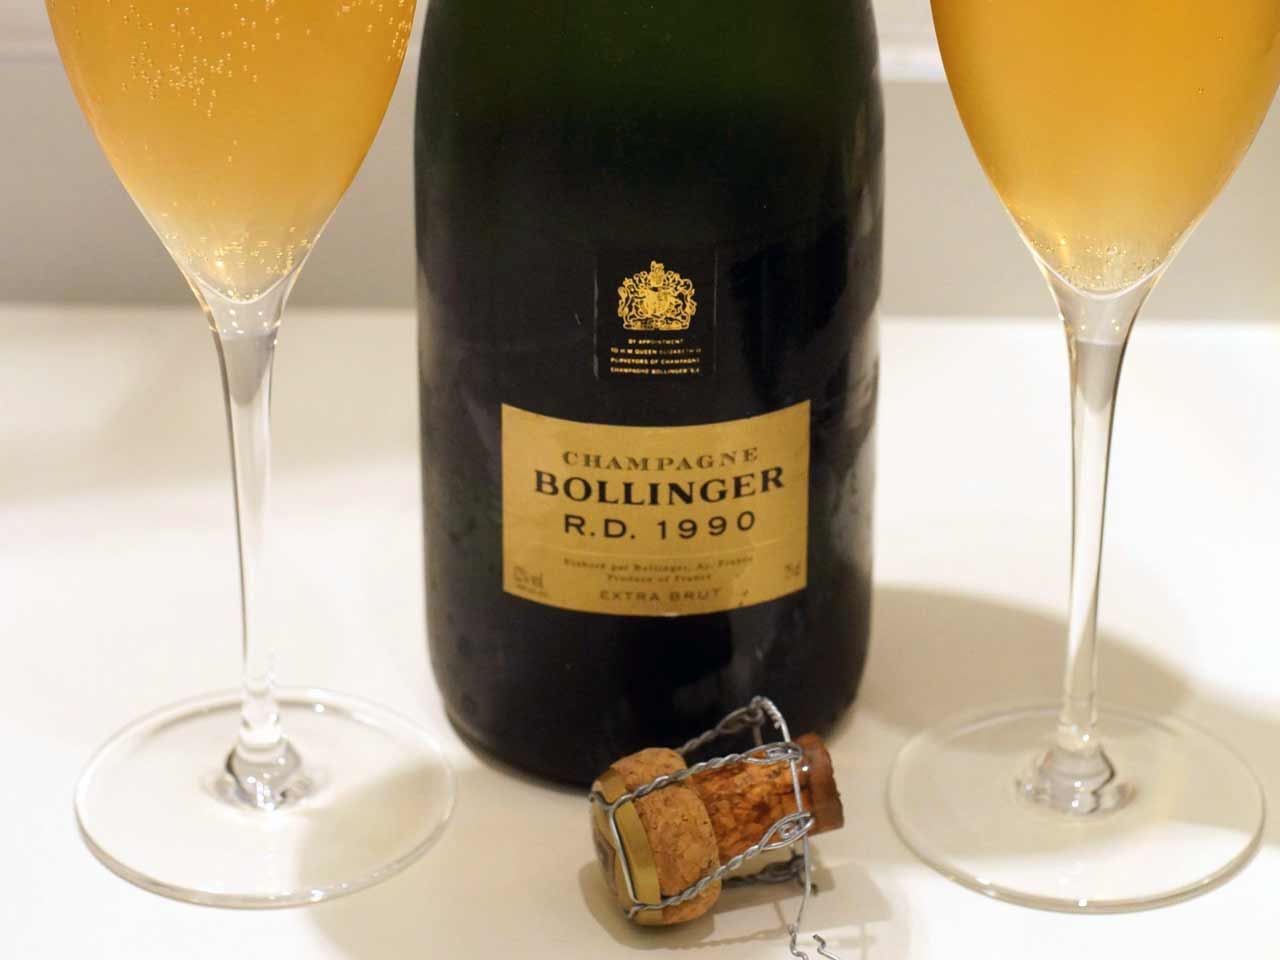 1990 Champagne Bollinger R.D. extra Brut